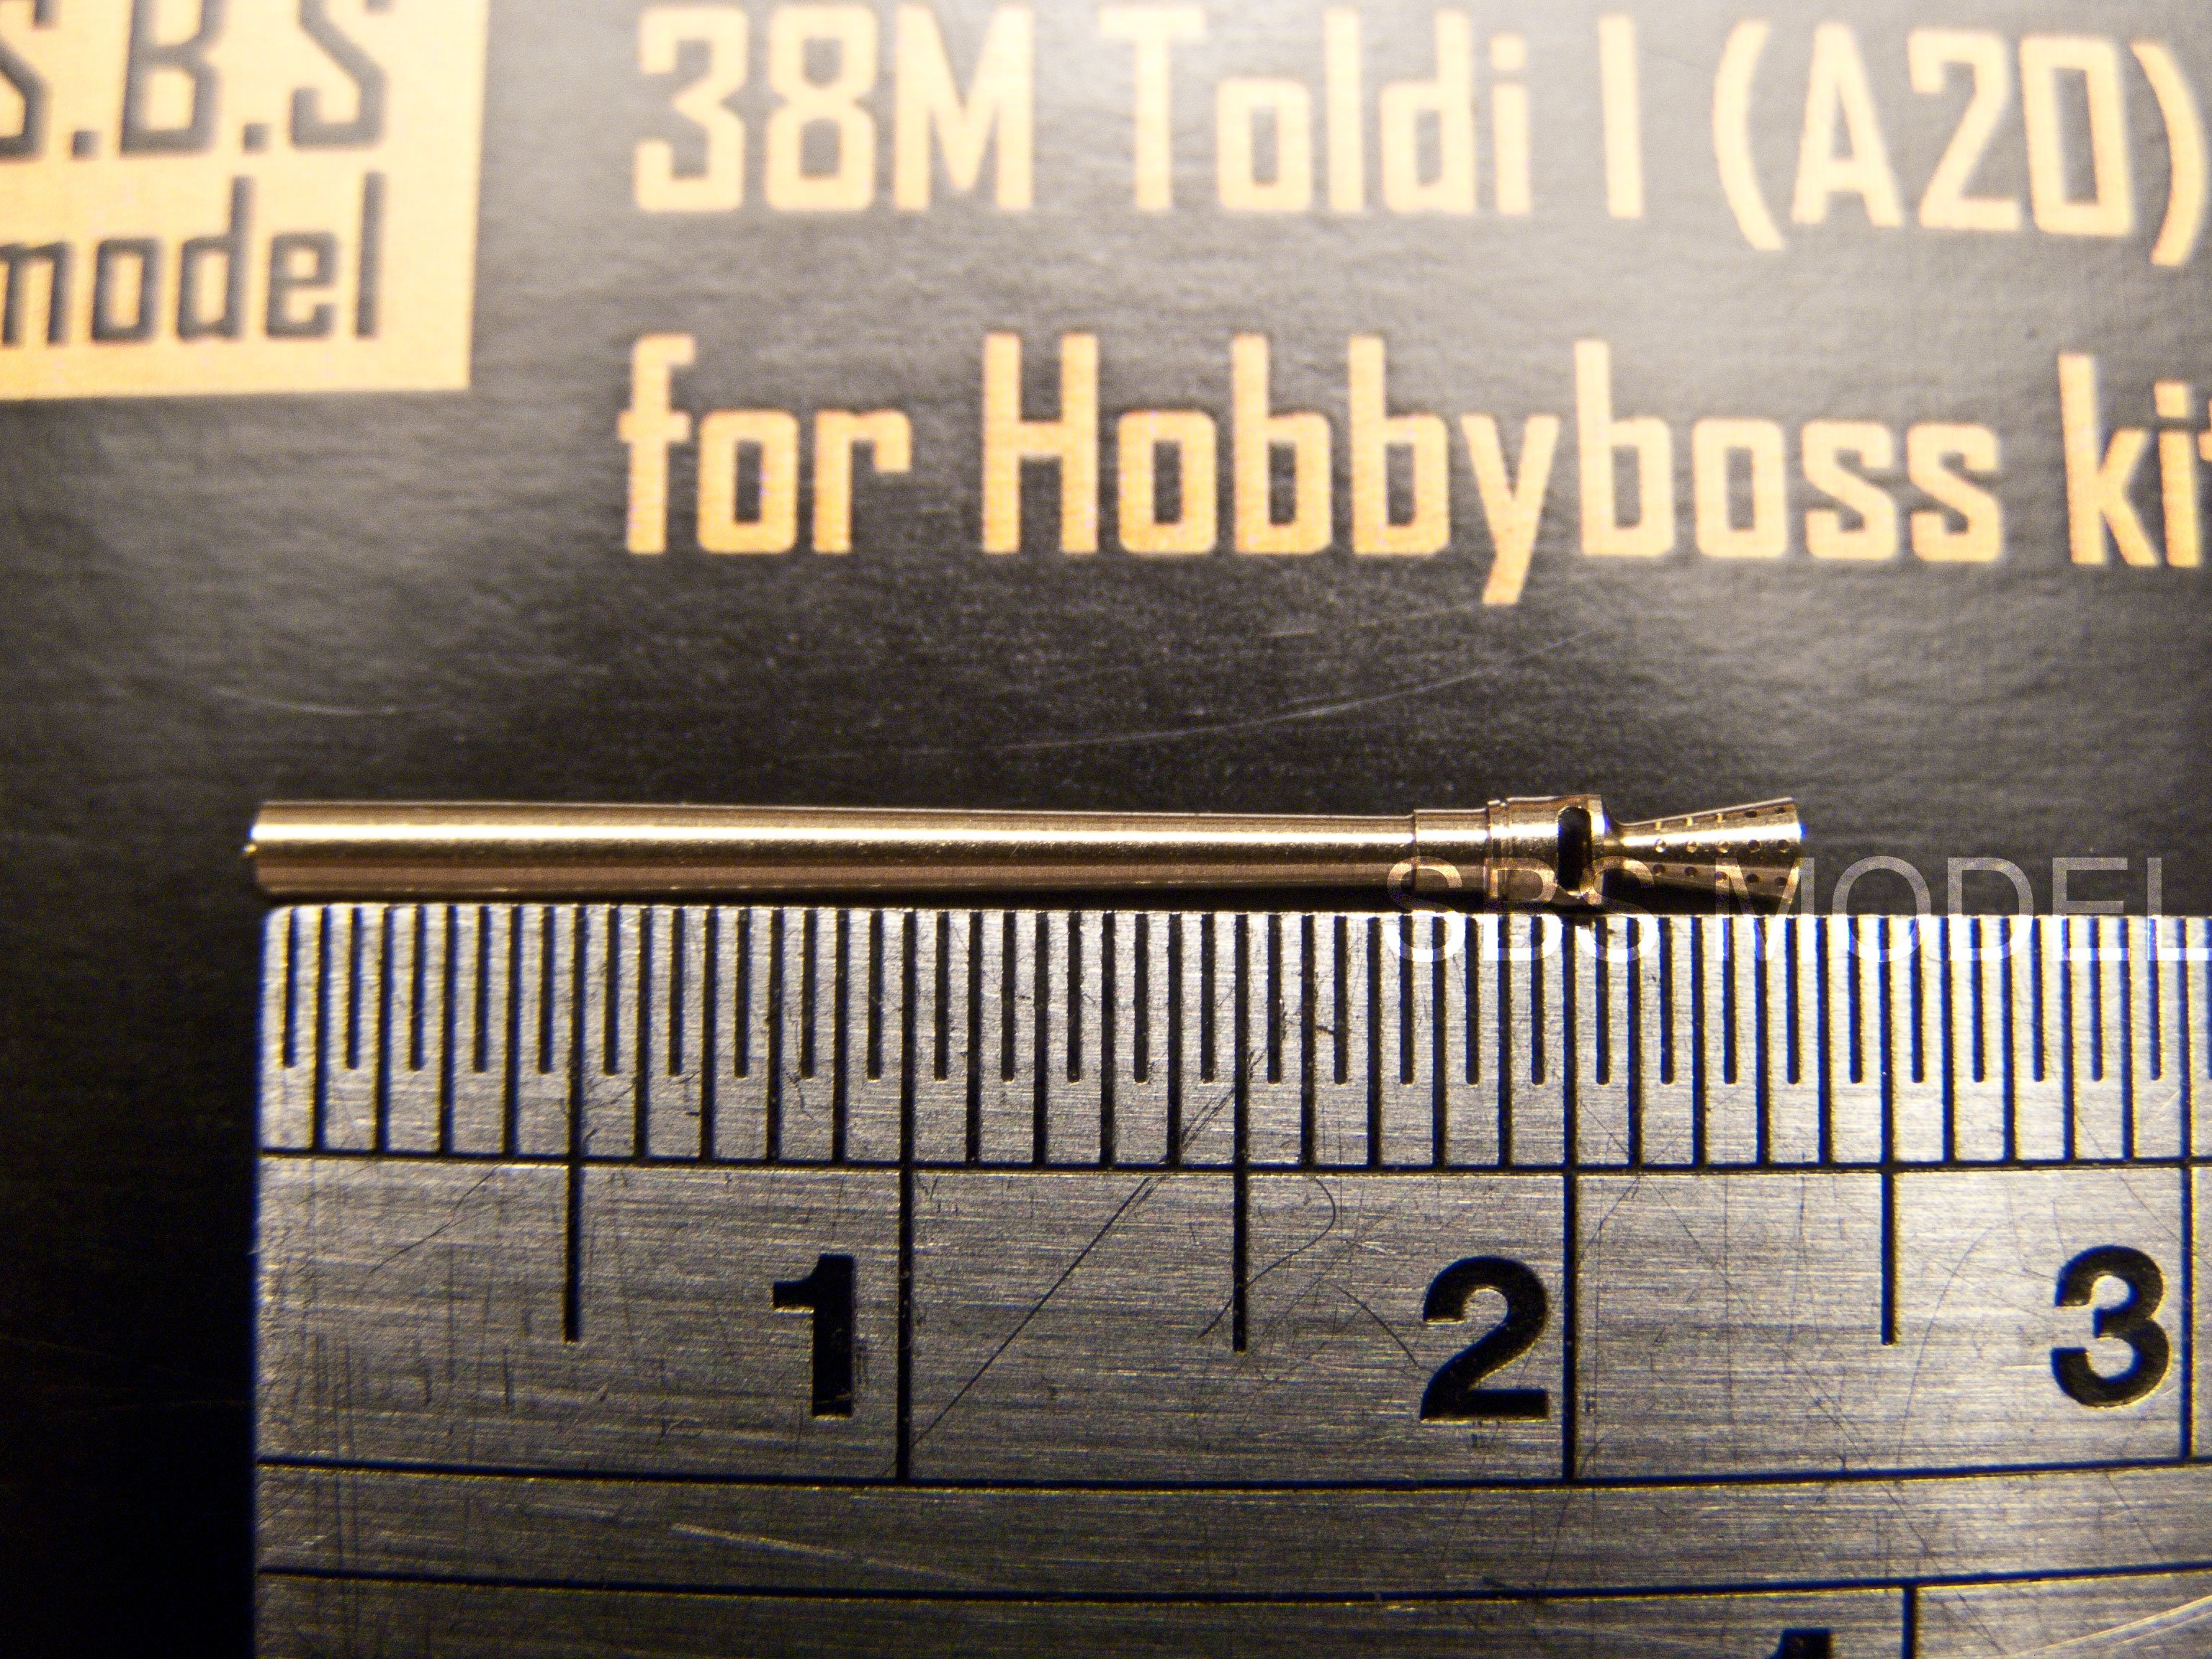 1/35 Toldi I (A20) 20mm Gun Barrel for Hobby Boss - Click Image to Close